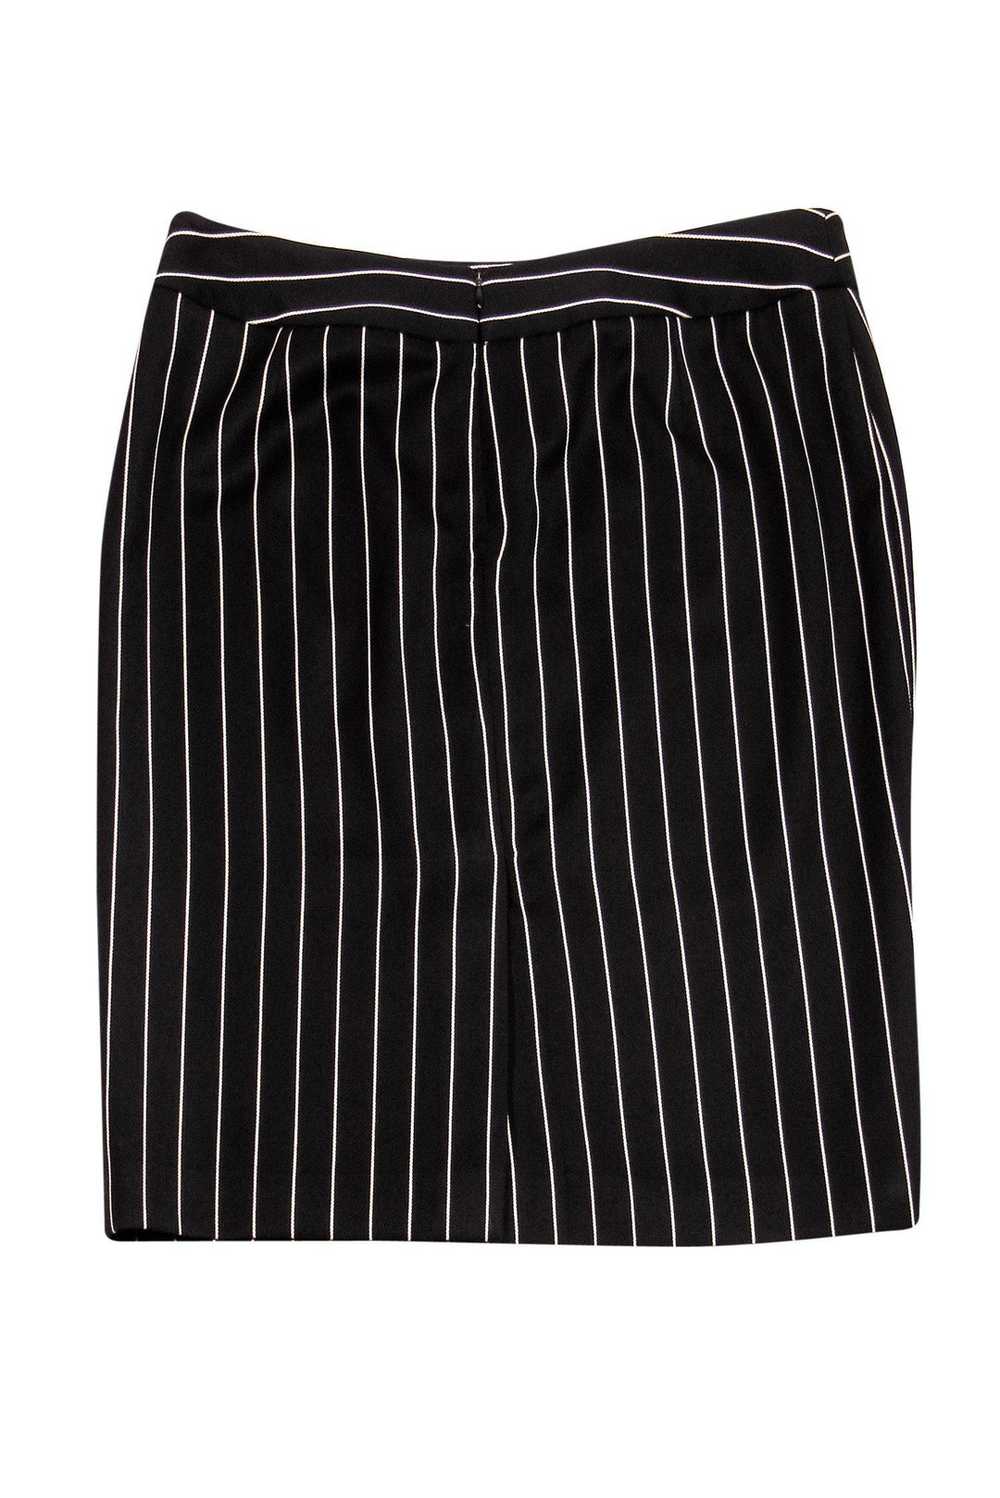 Armani Collezioni - Black & White Pinstripe Skirt… - image 2